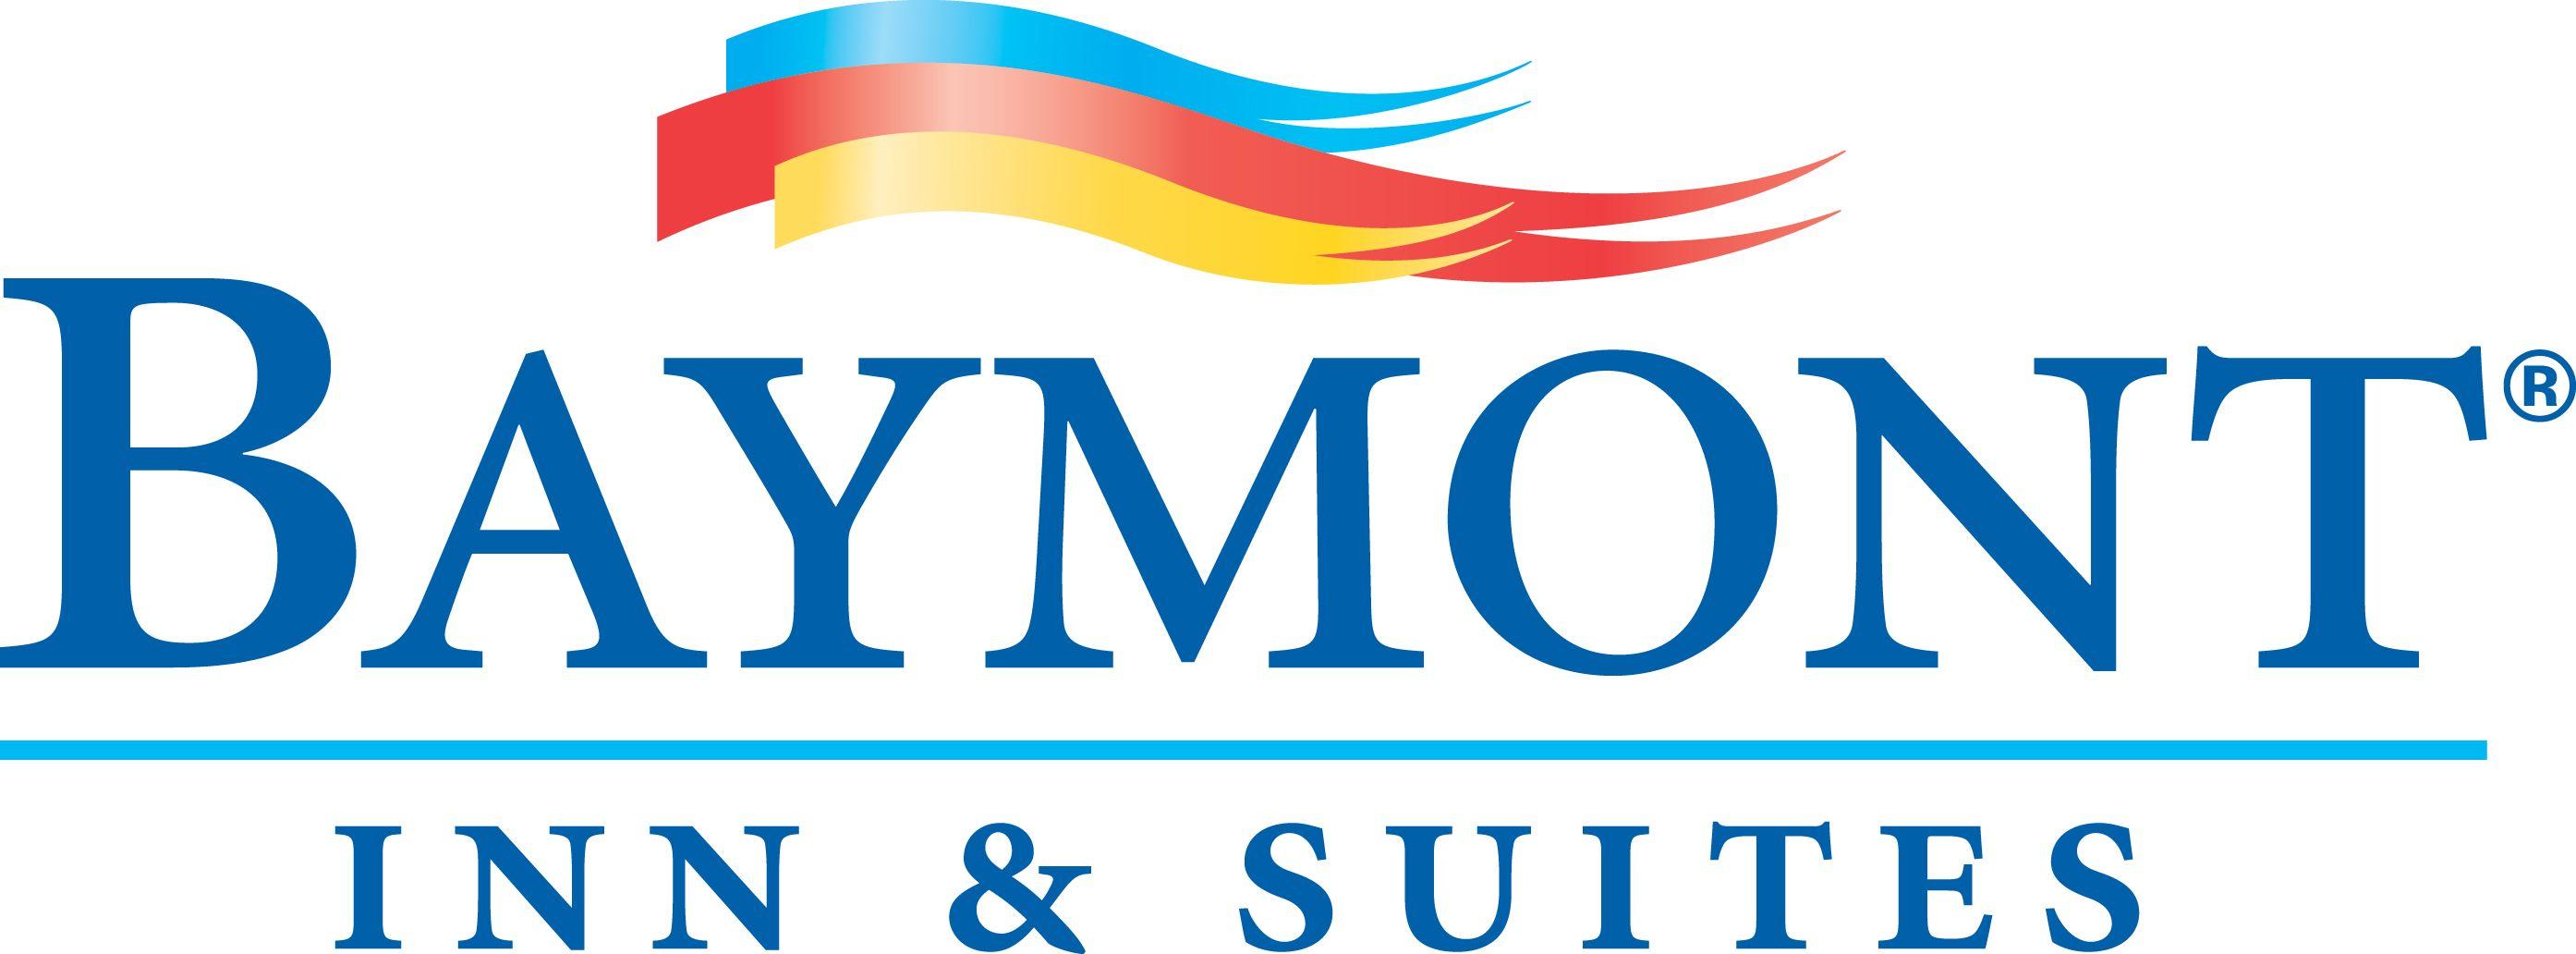 Wyndham Logo - Baymont Inn & Suites Logo | Wyndham Destinations